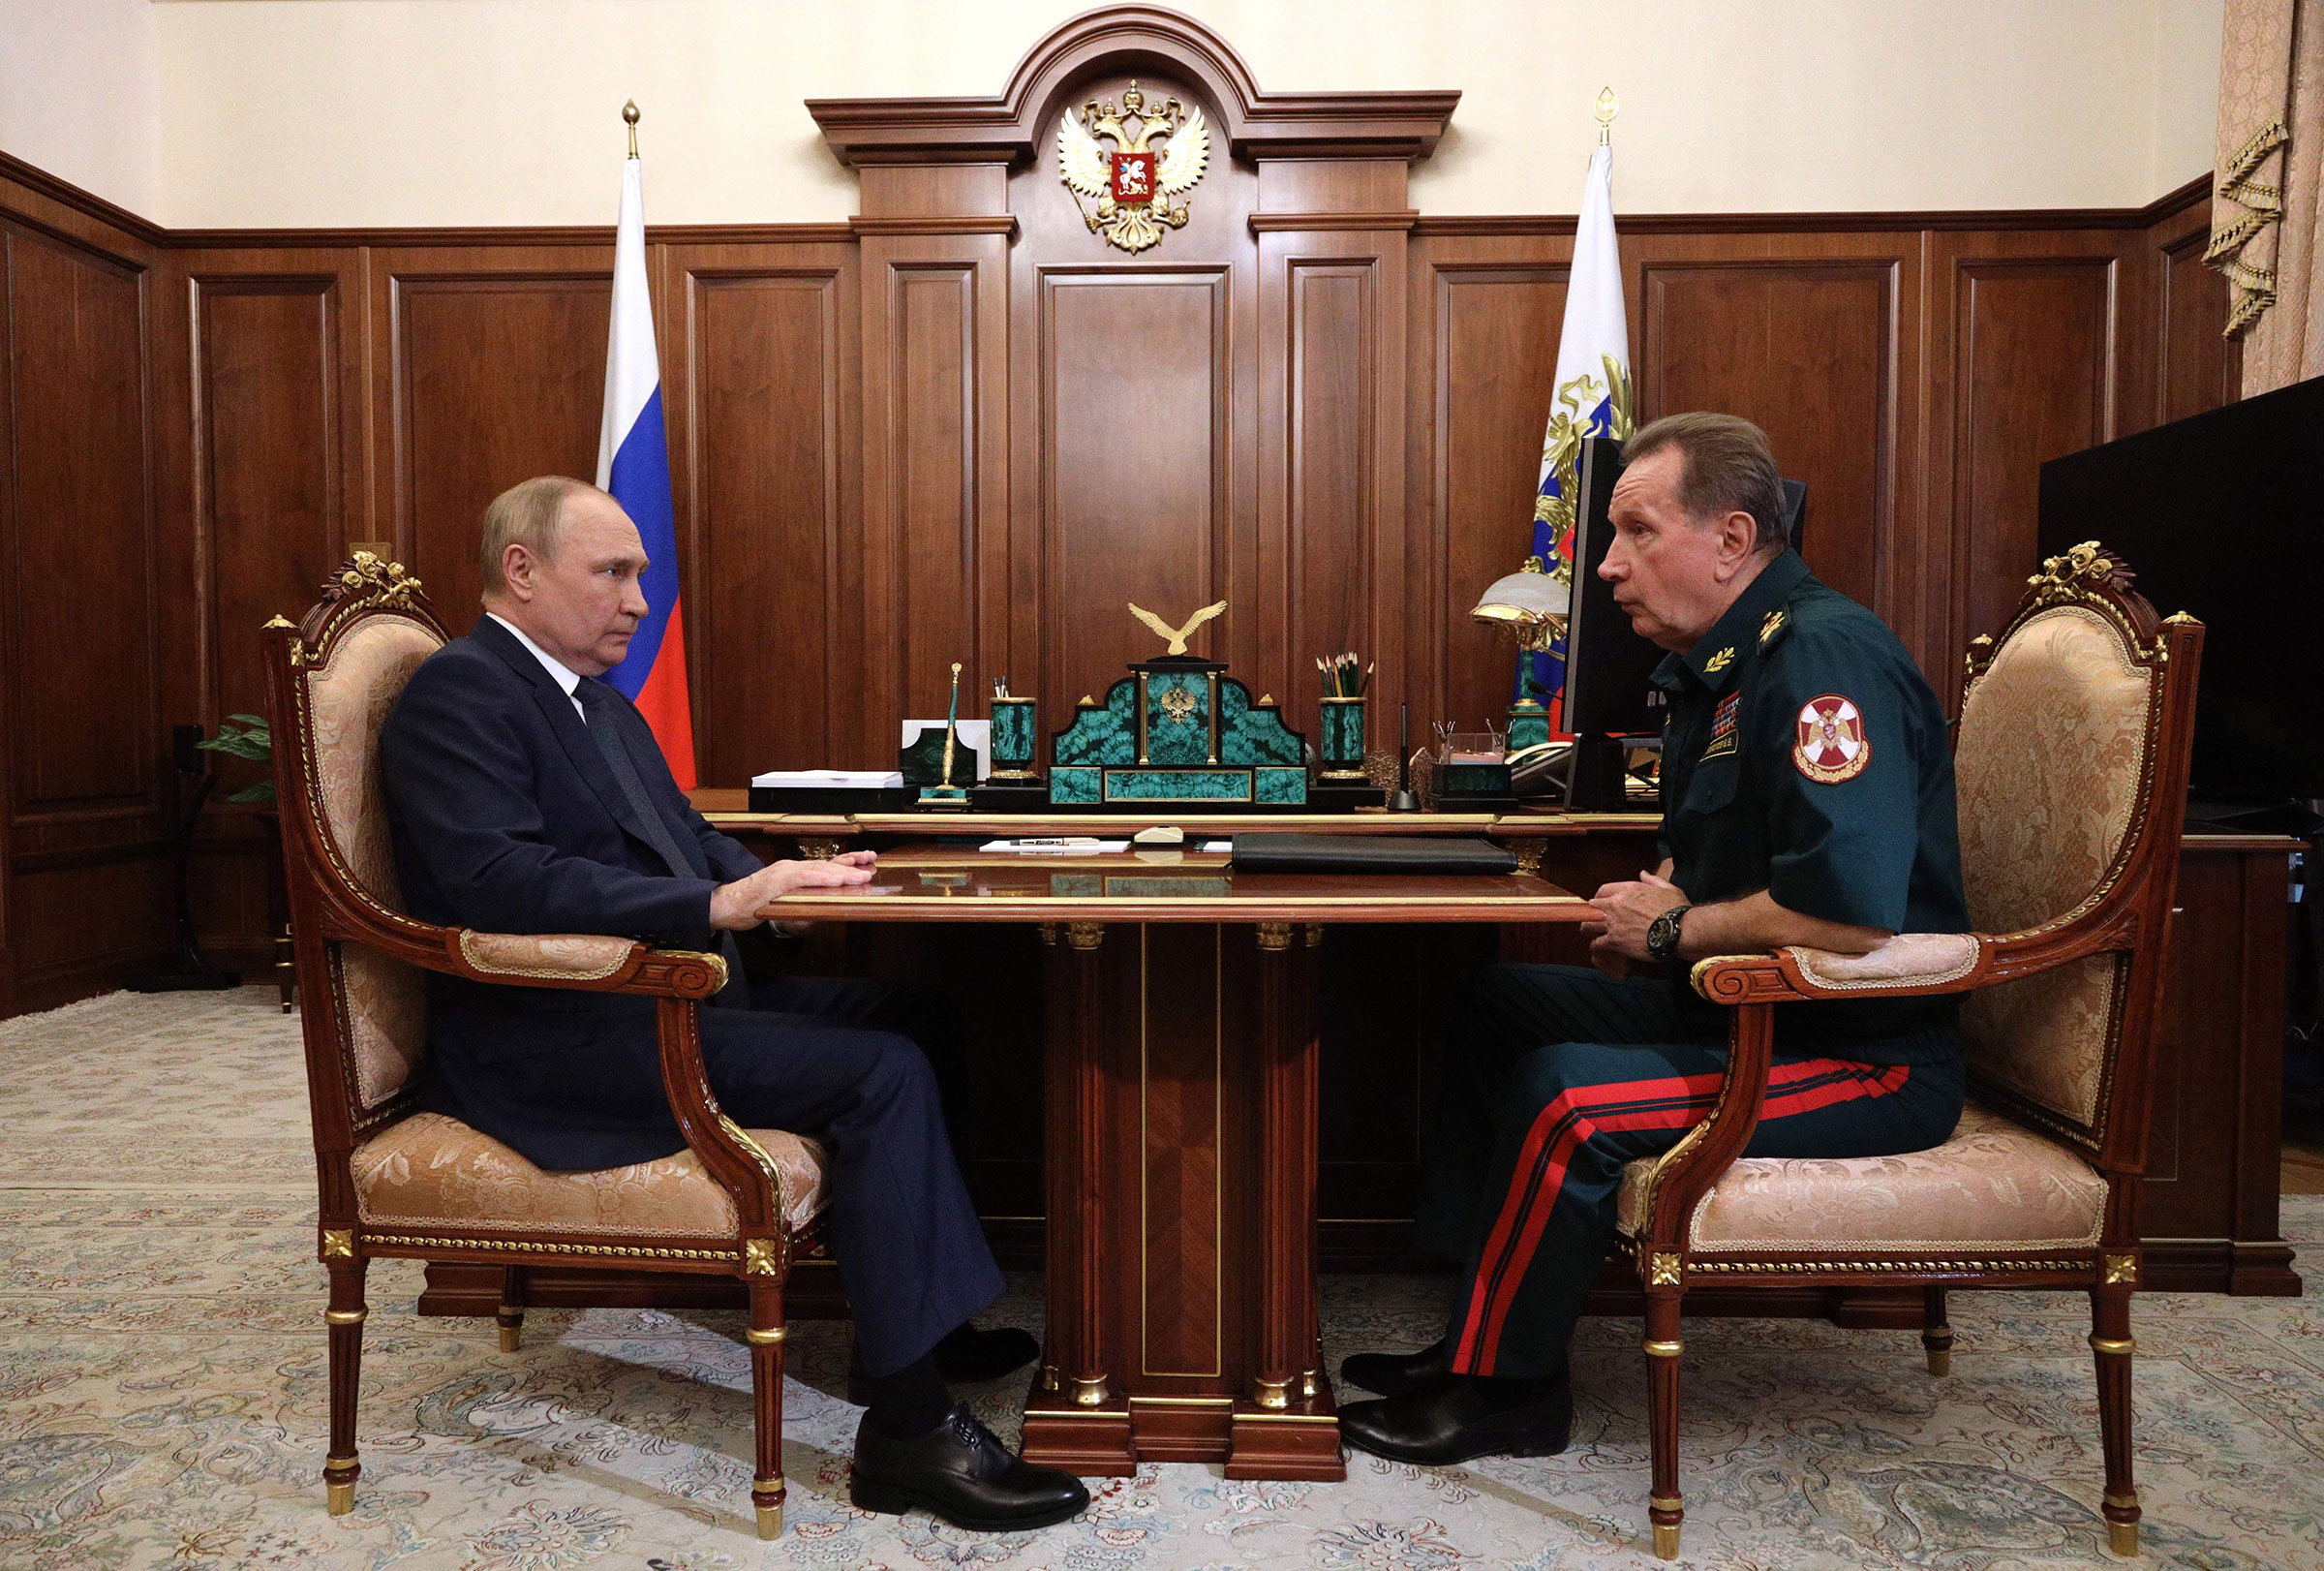 Vladimir Putin speaks Viktor Zolotov during their meeting